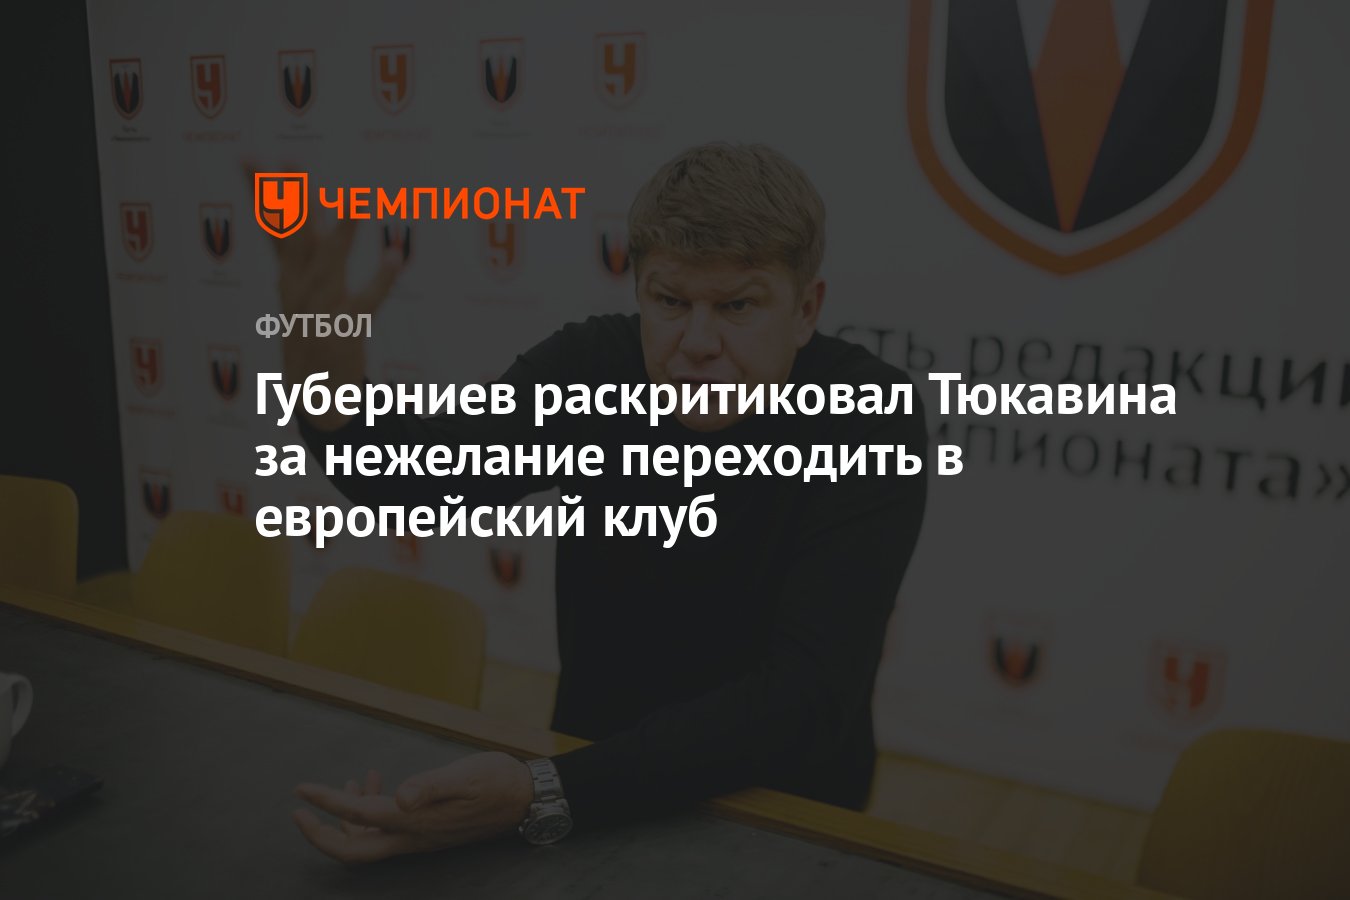 Guberniev criticized Tyukavina for unwillingness to move to a European club thumbnail